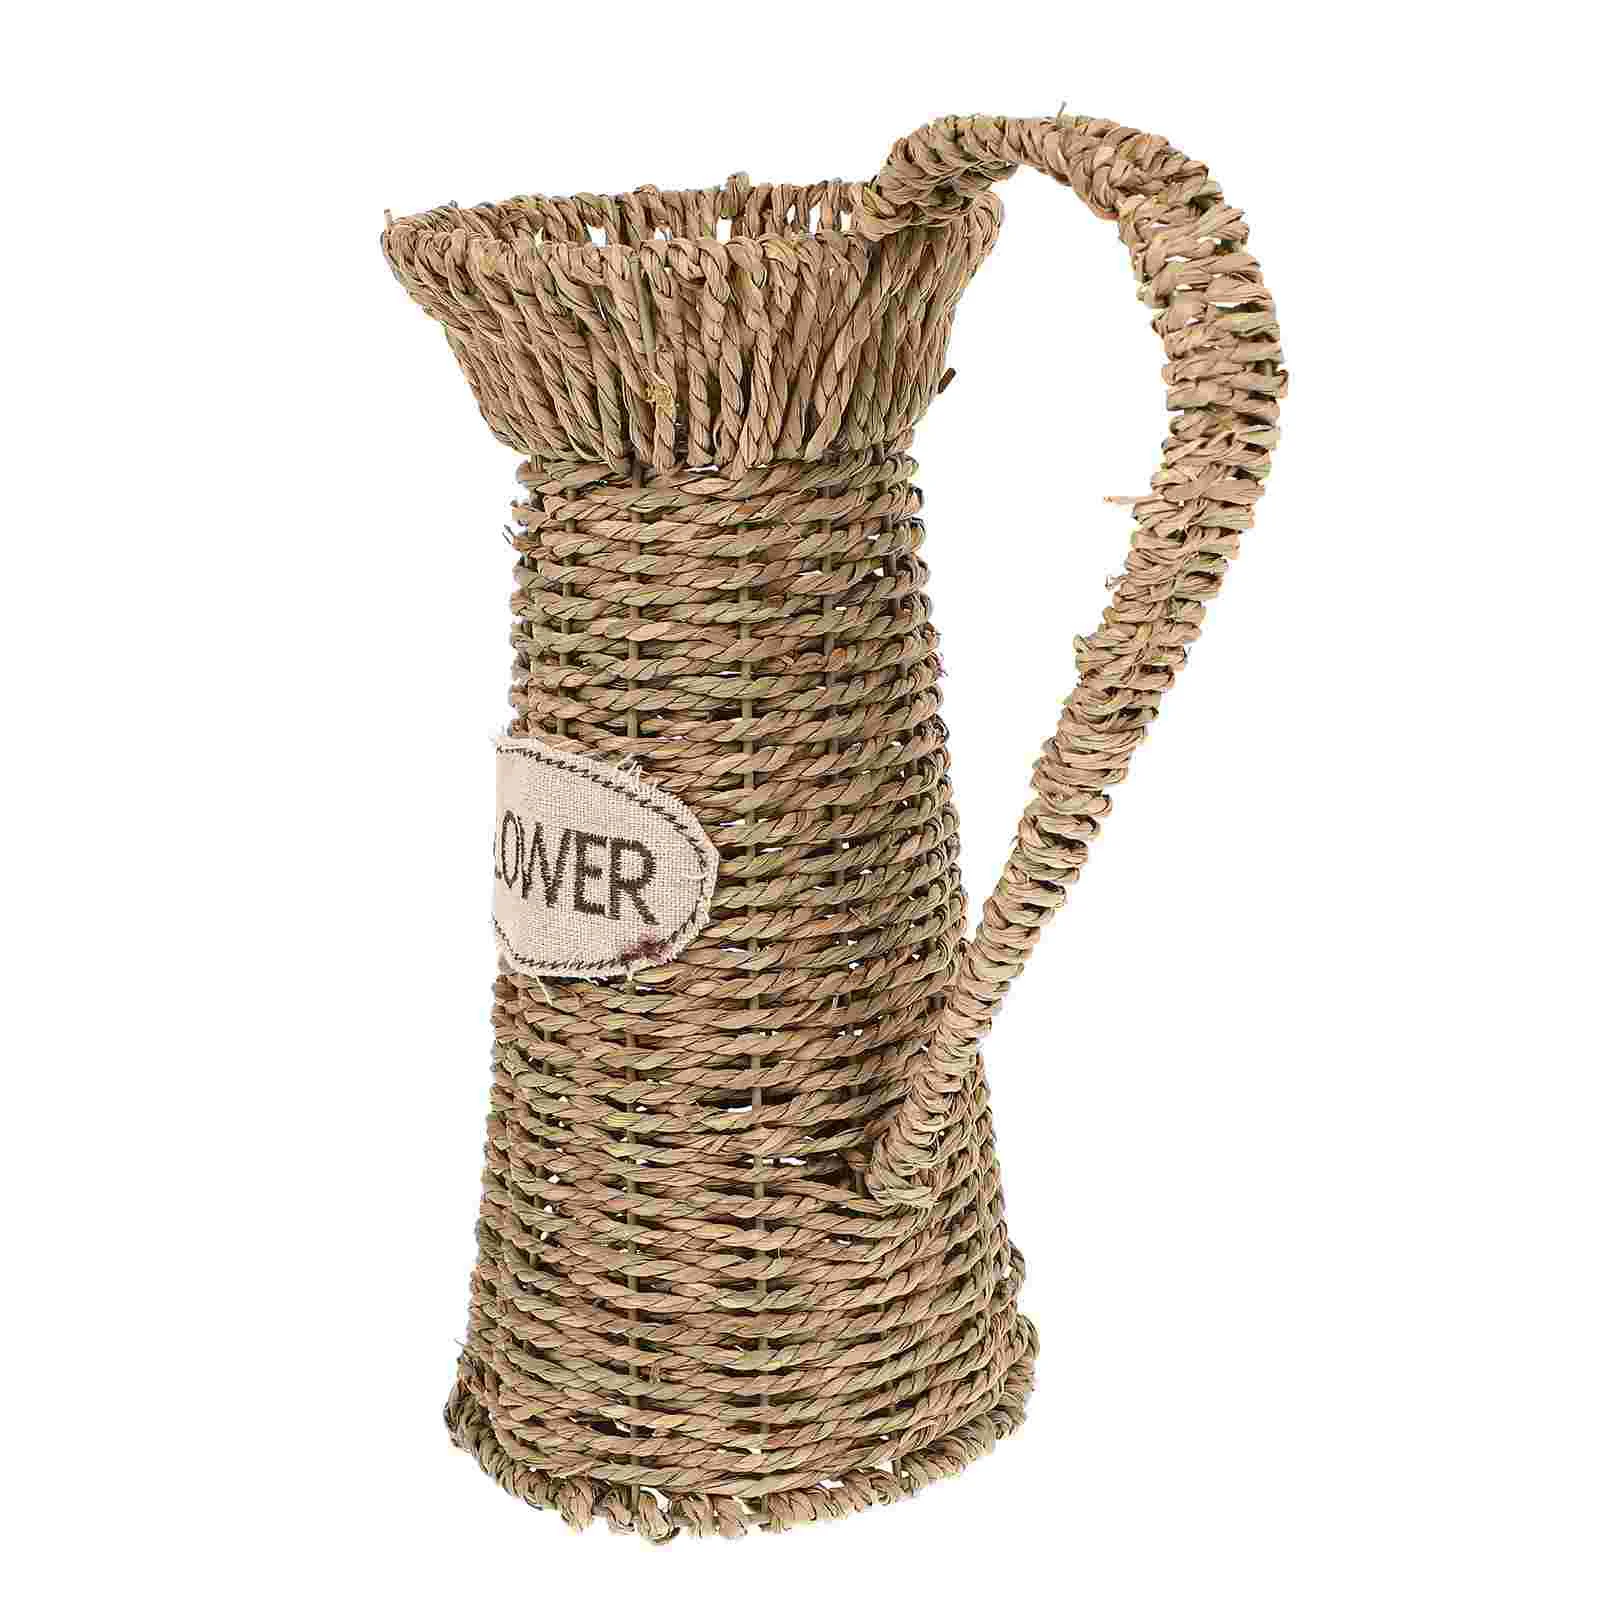 

Flower Vase Basket Vases Woven Rattan Rustic Pot Wicker Holder Seagrass Decor Planter Farmhouse Wood Home Flowers Dried